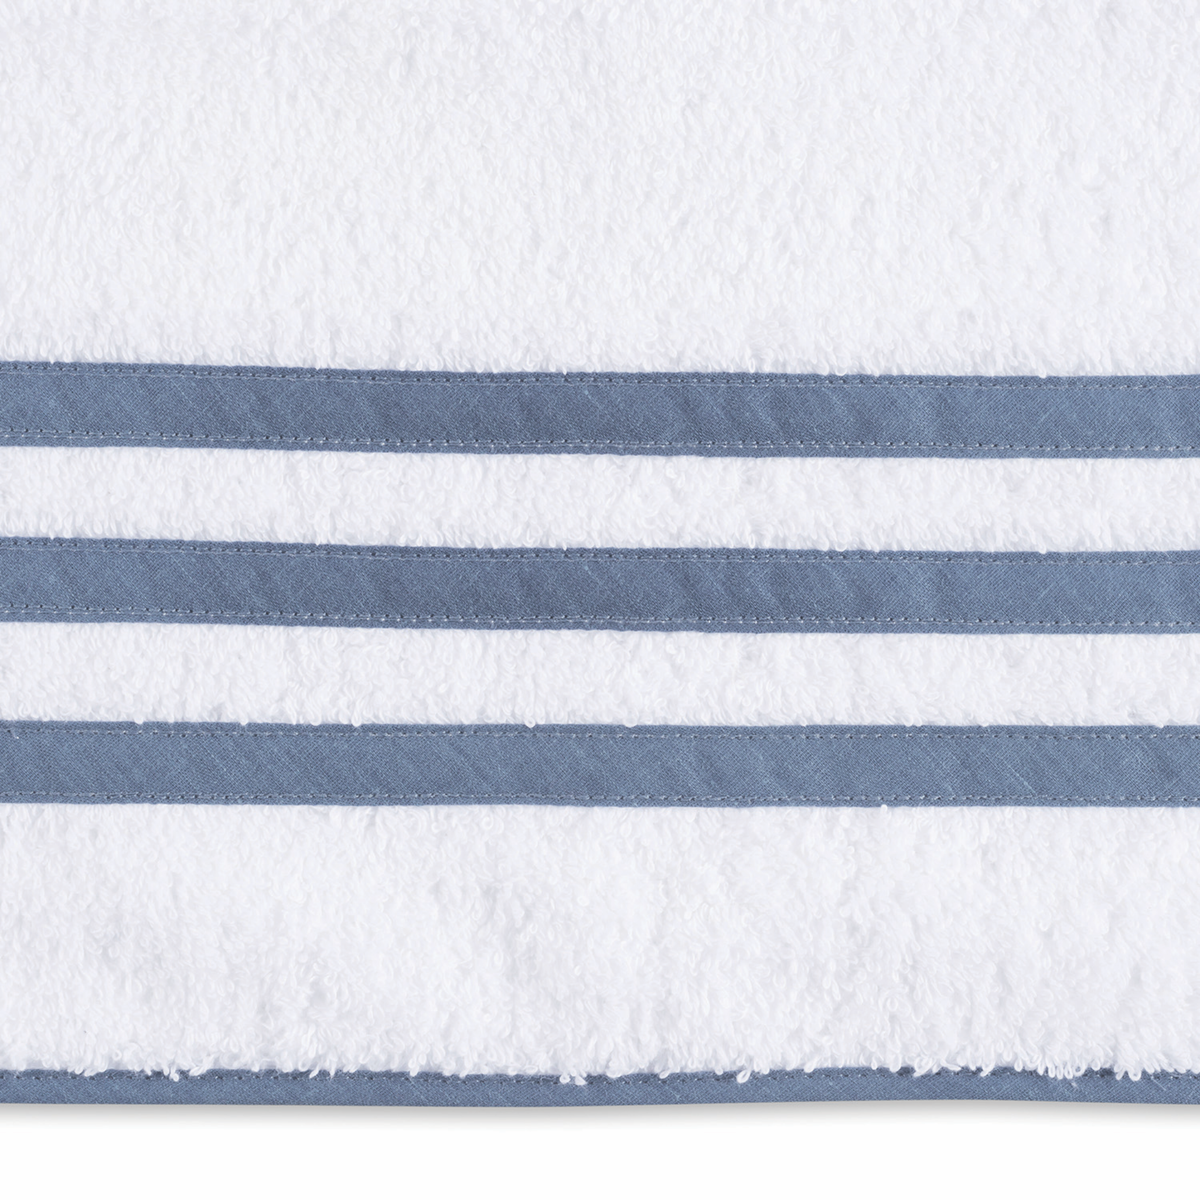 Swatch Sample of Matouk Newport Bath Towels and Mat Sea Color